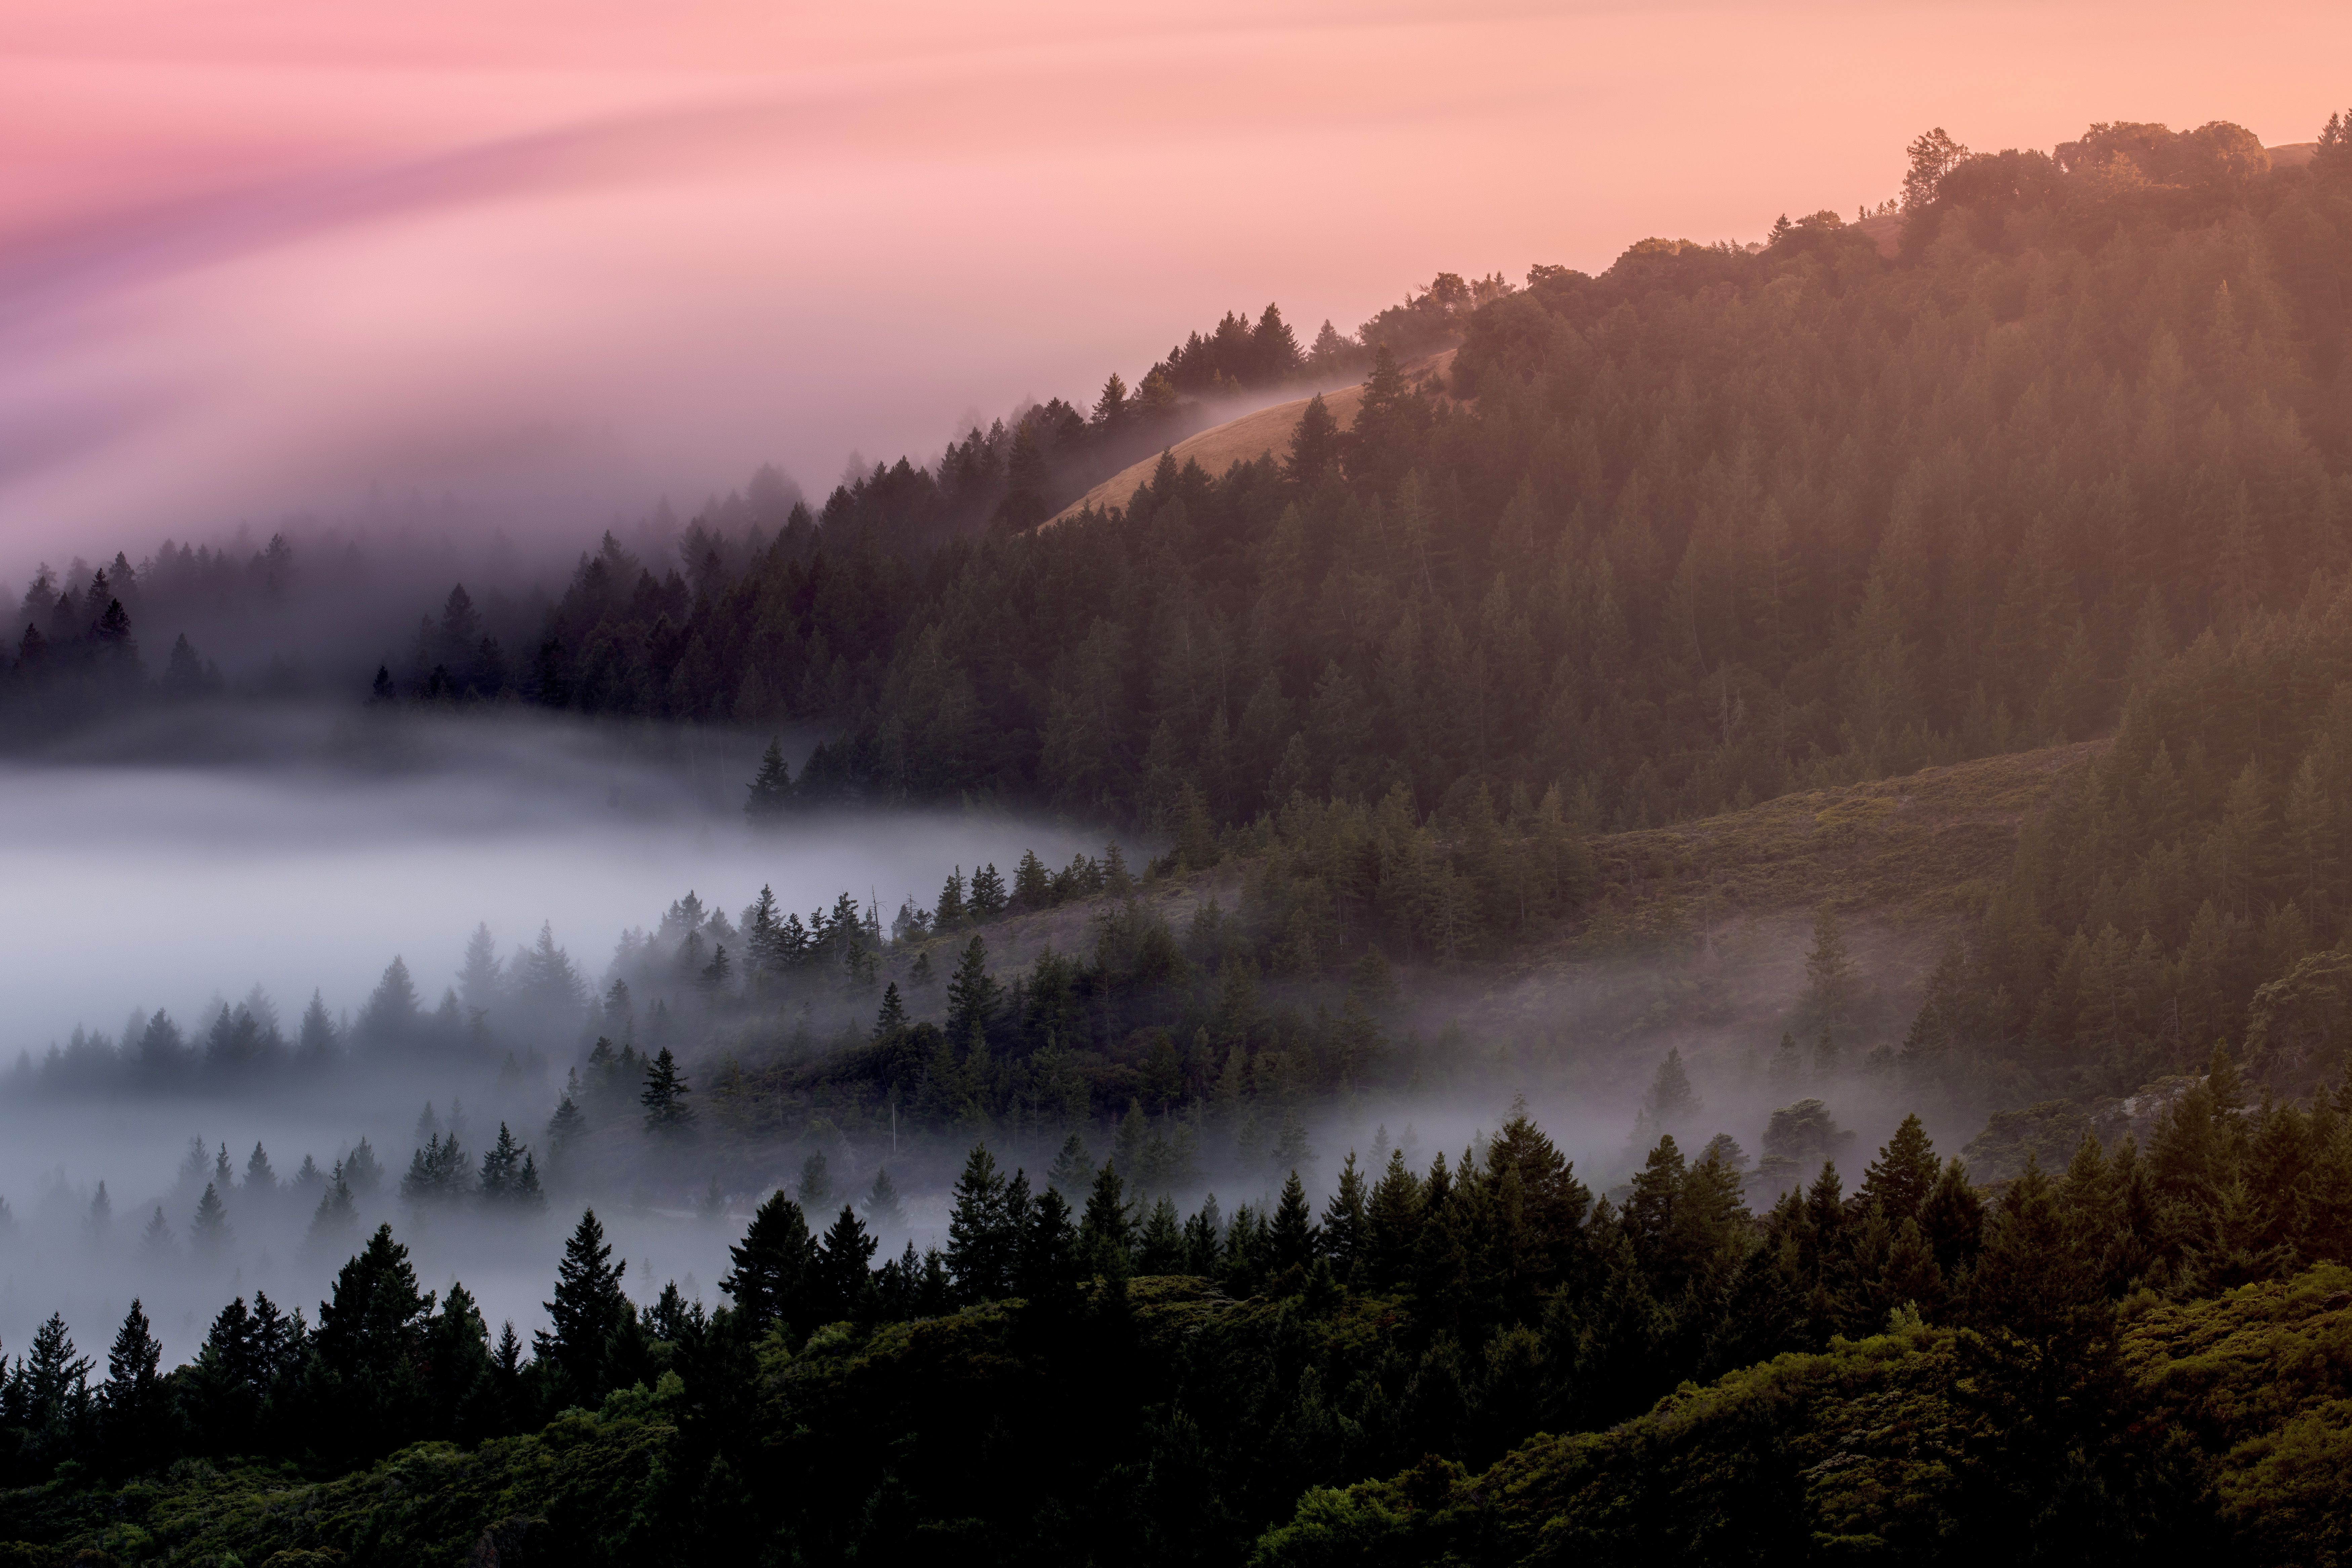 Wallpaper Forest, Morning, Foggy, Misty, Mountain, Blue hour, 4K